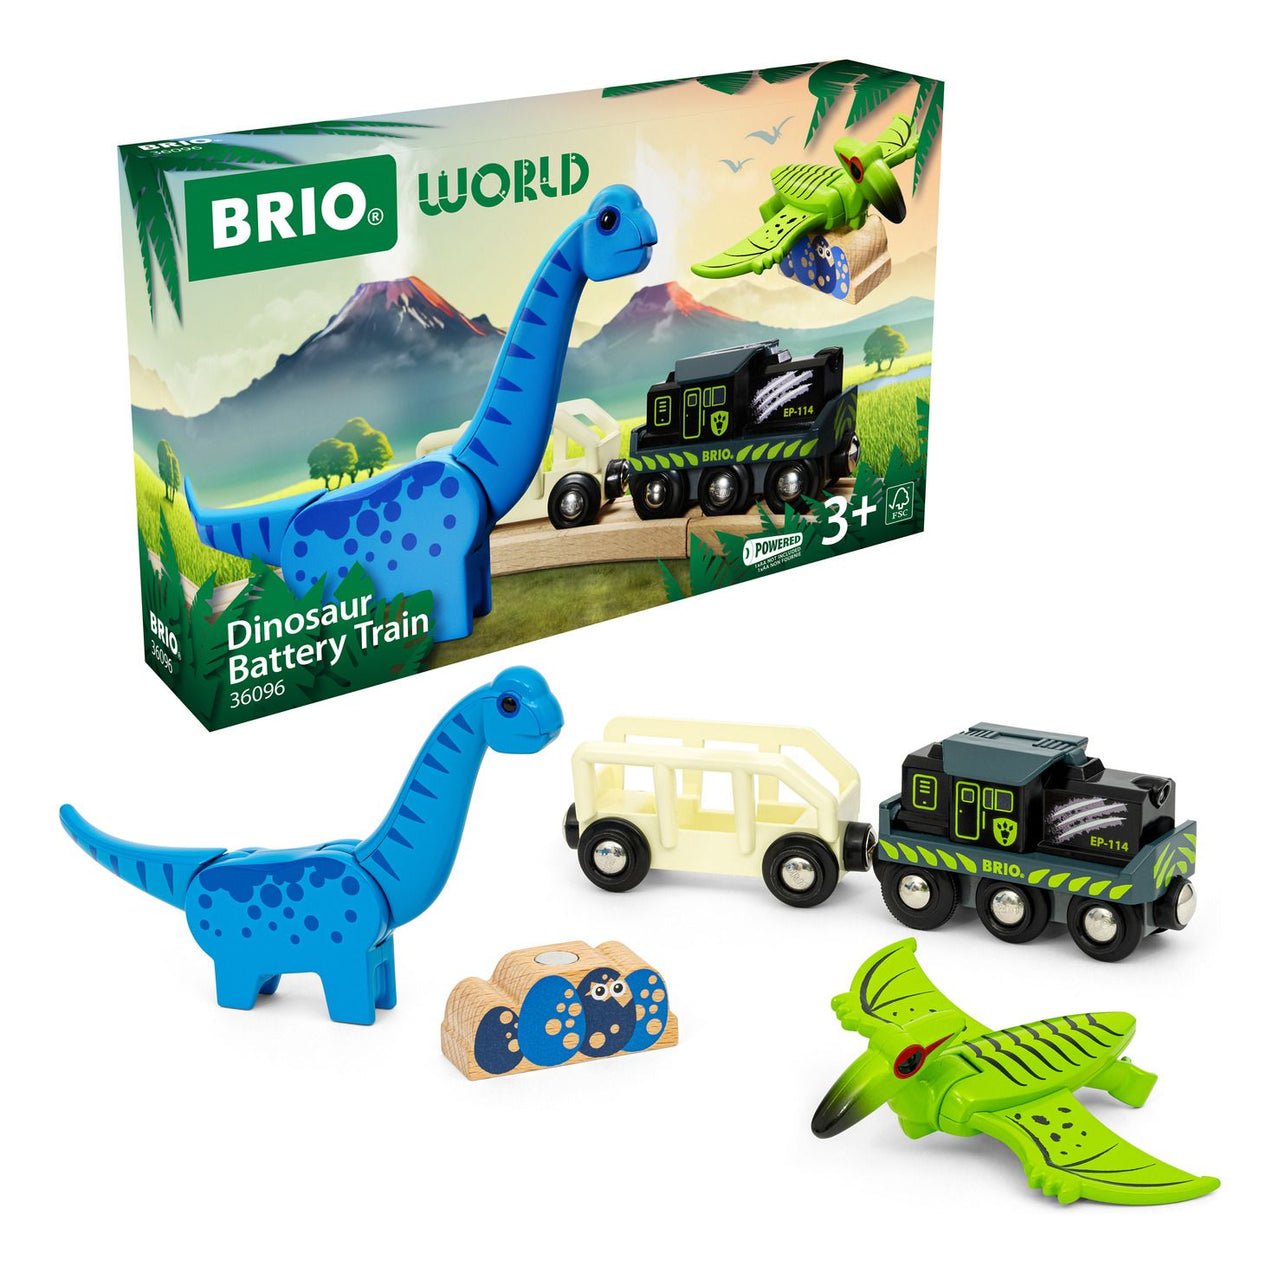 Brio Dinosaur Battery Train BRIO